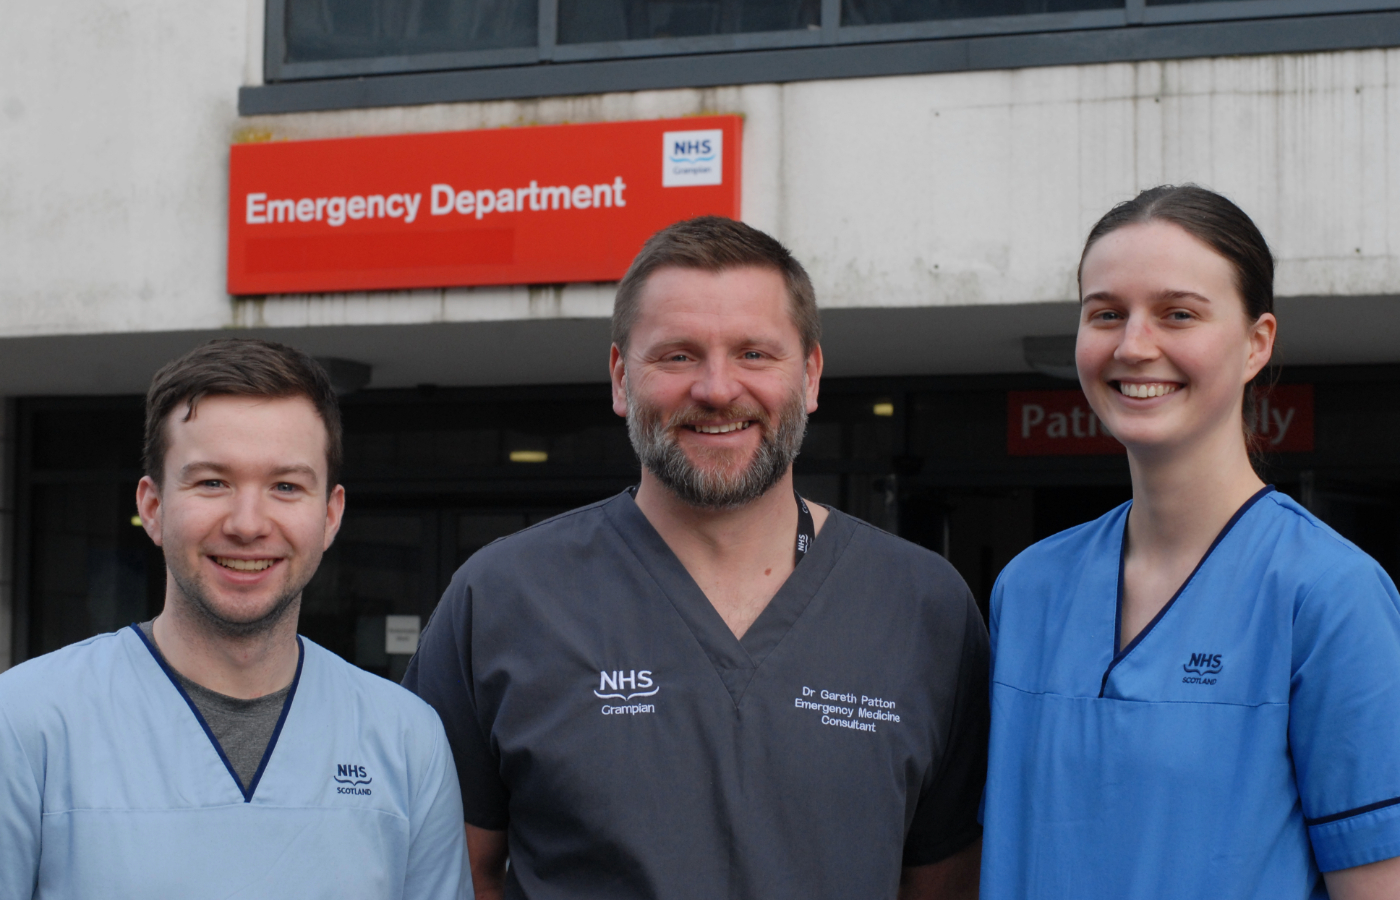 Gareth Patton, consultant in emergency medicine, Charlotte Pinkerton, staff nurse, and Alexander Brooks, senior health care support.